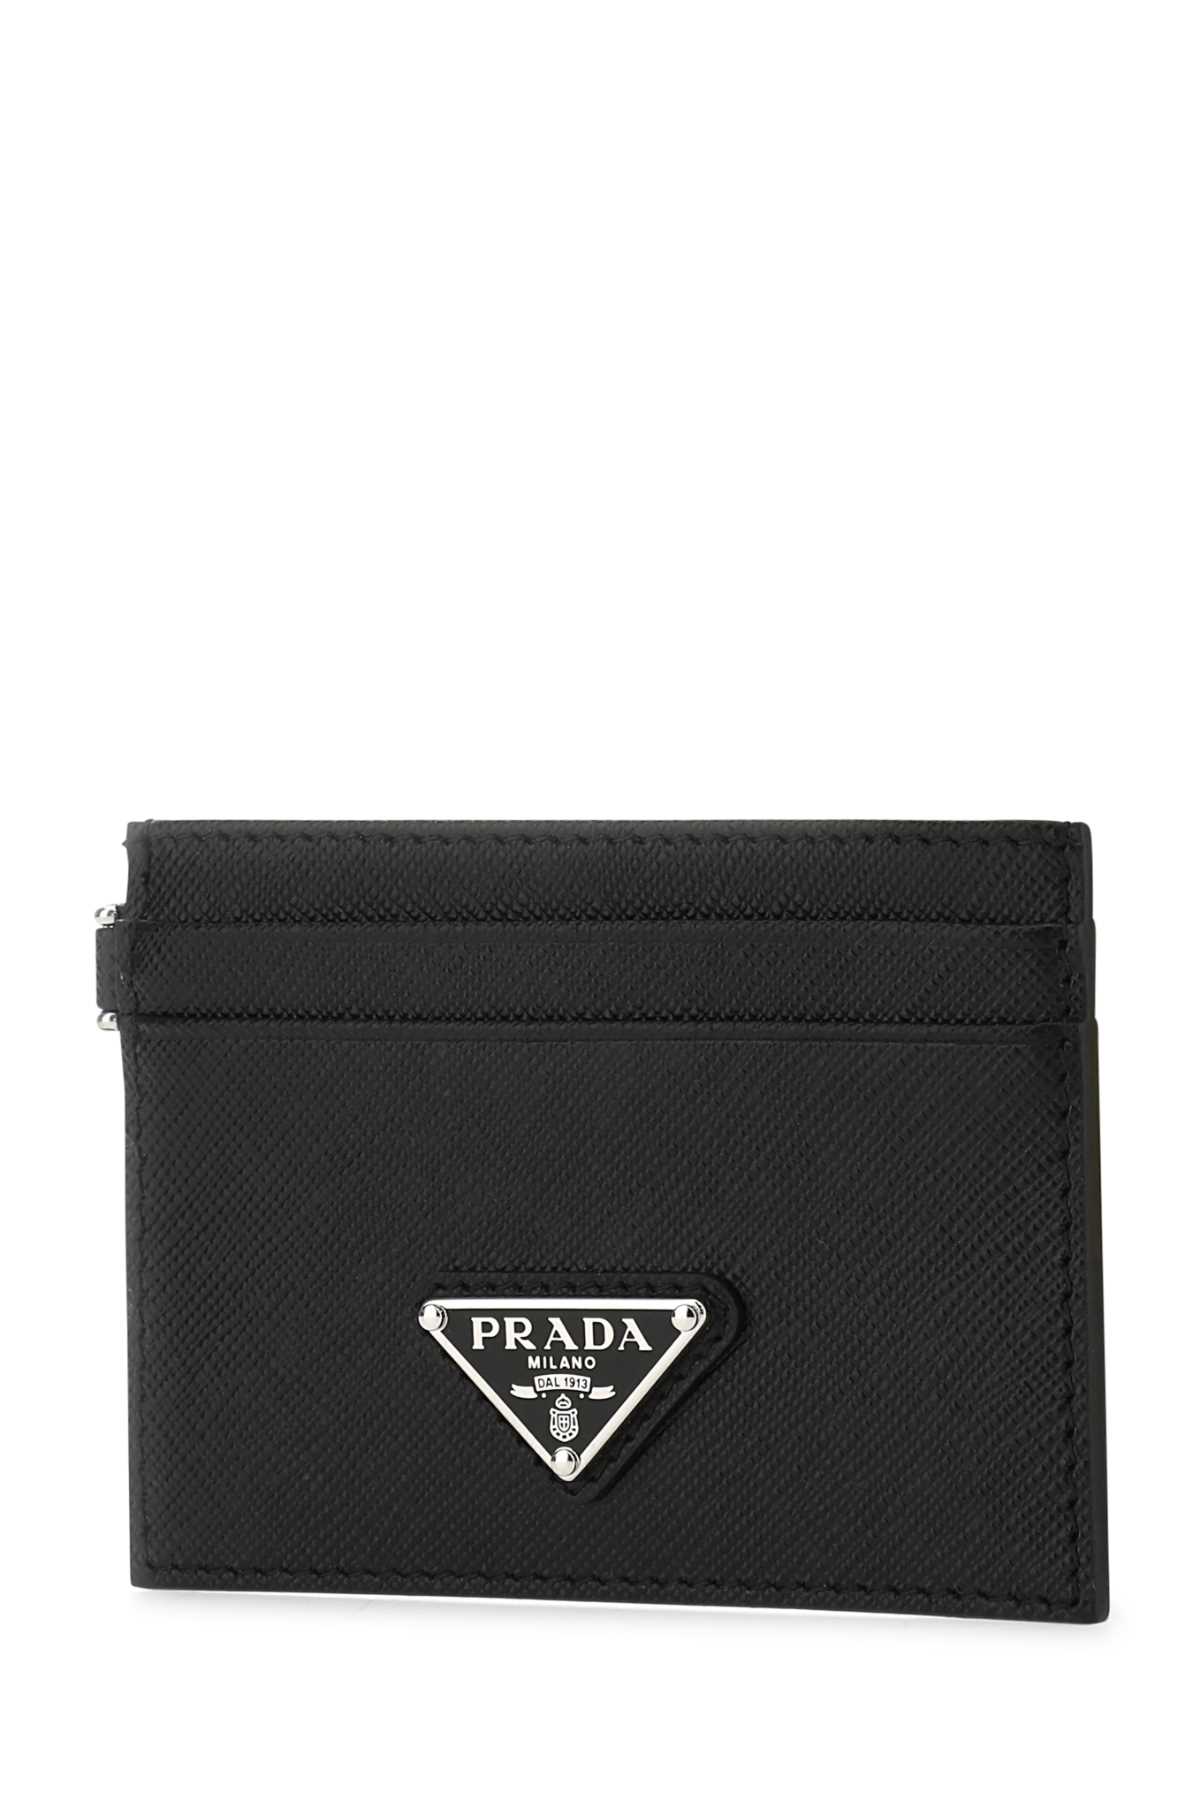 Shop Prada Black Leather Card Holder In F0002